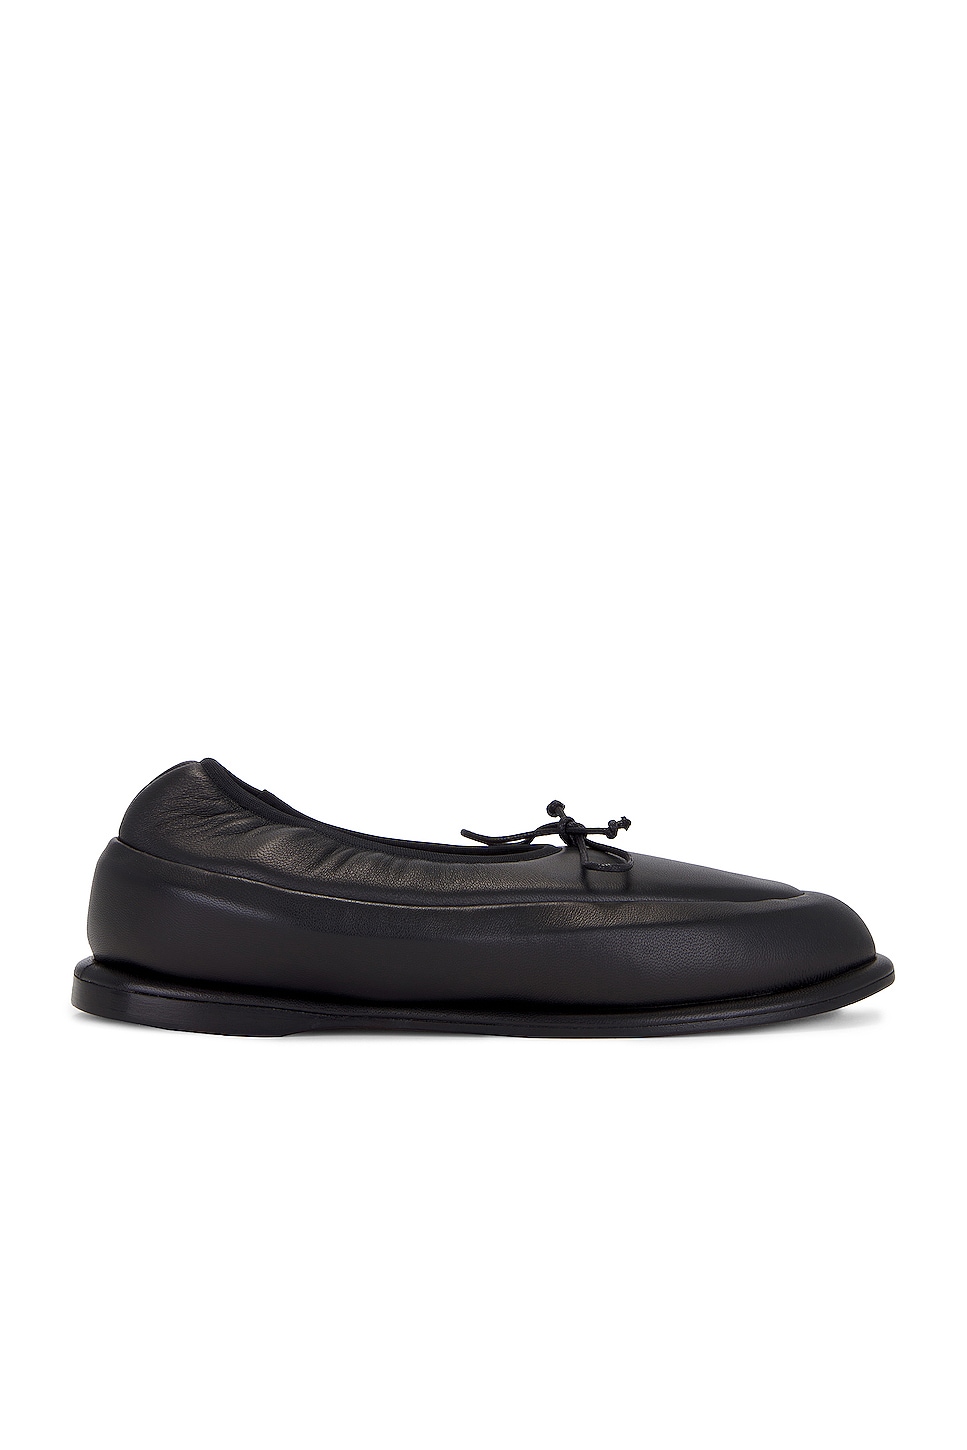 Image 1 of JACQUEMUS Les Chaussures Pilou in Black